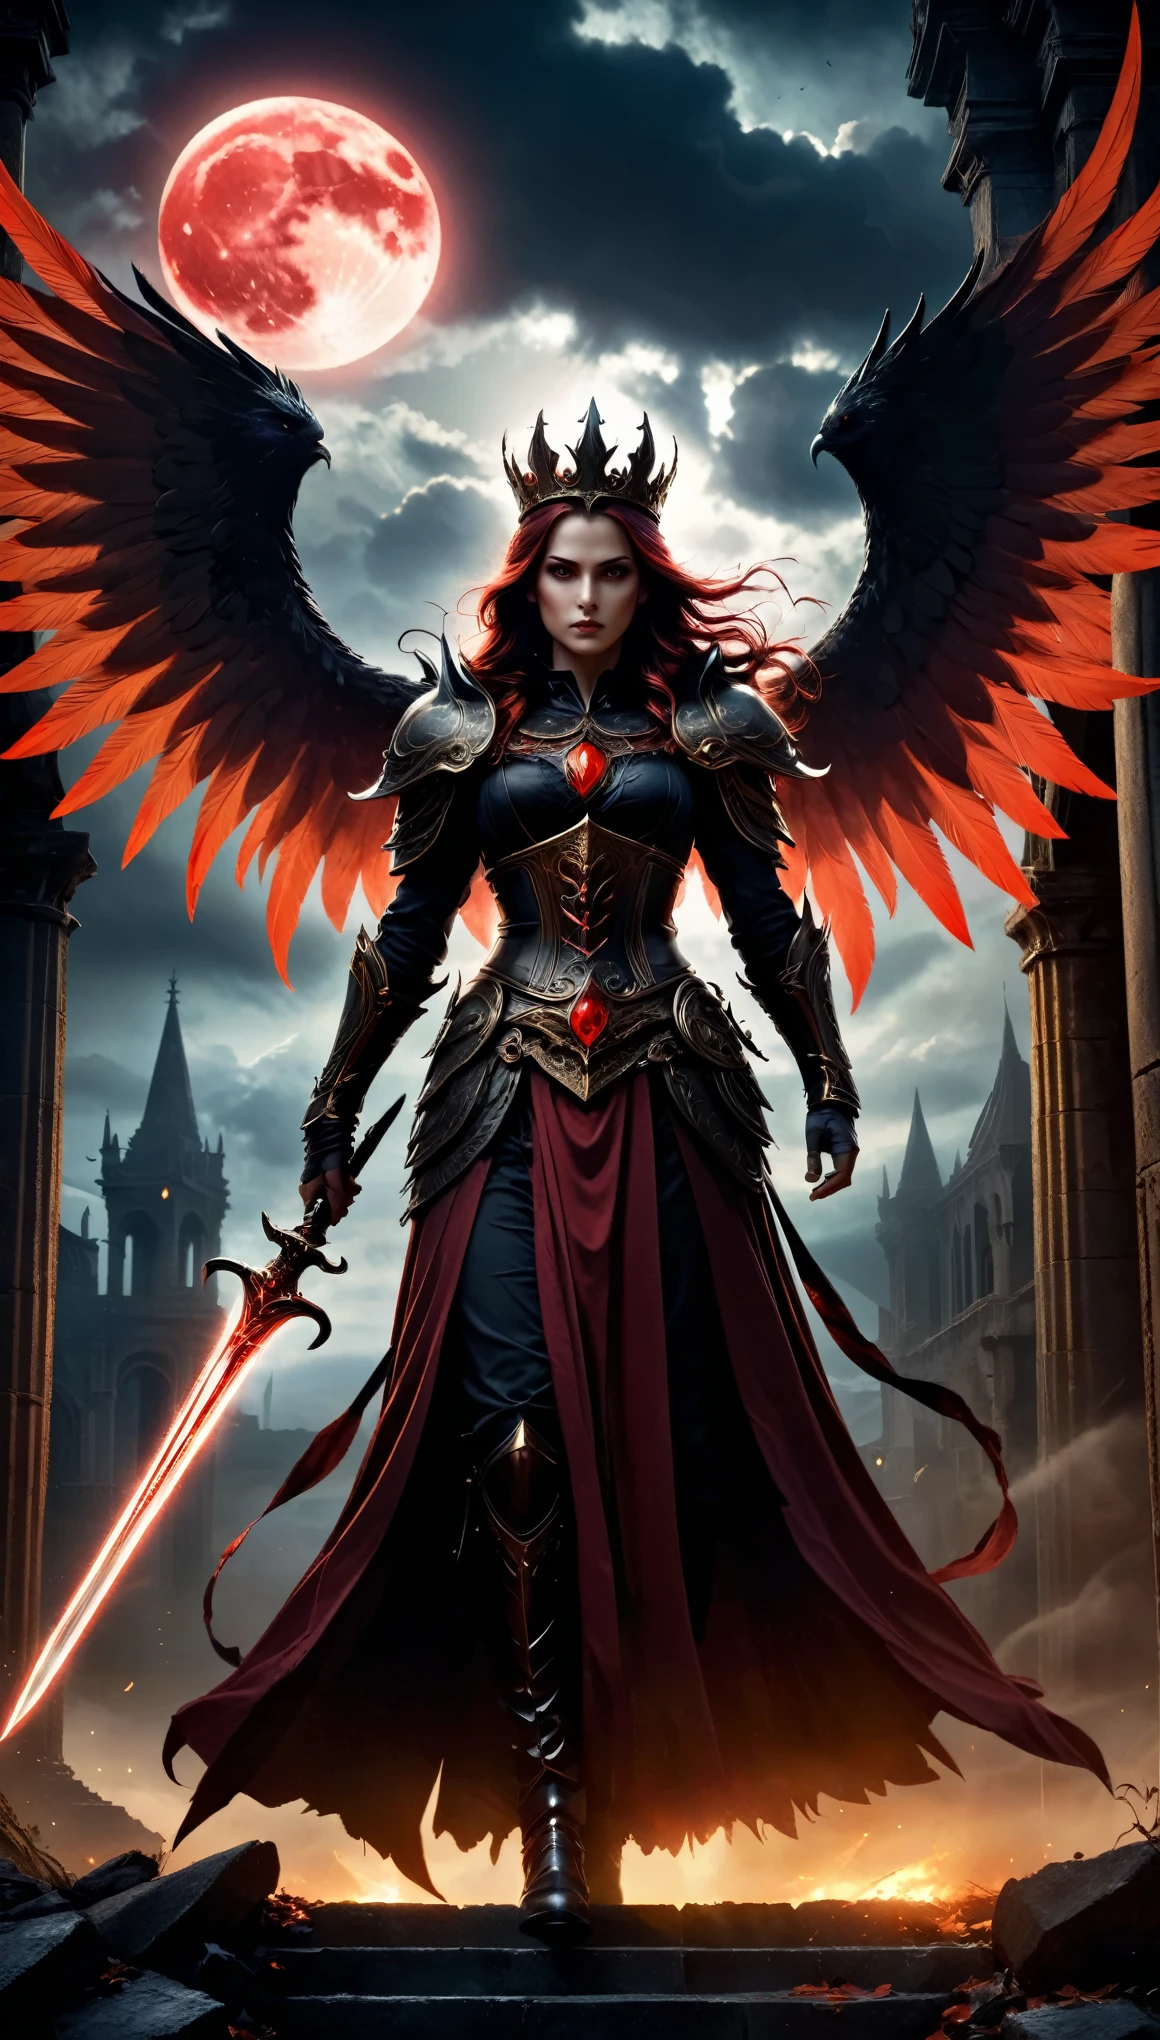 dark fantasy, dark aura, dark angel swordsman, Black armor with gold and bloody red decorations, ultra-detailed, 